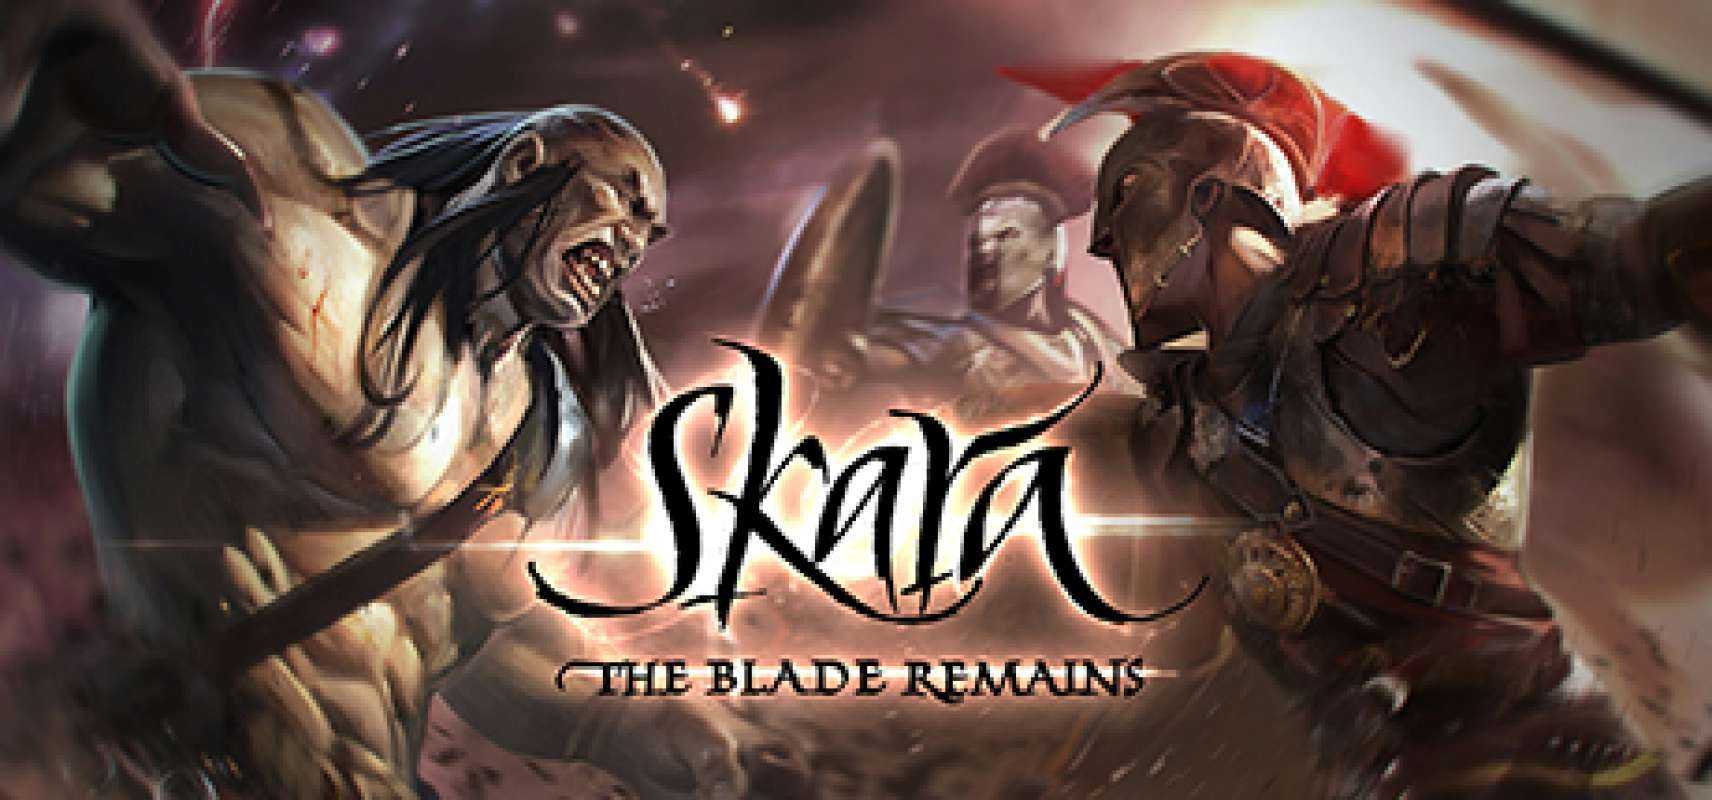 Skara — The Blade Remains